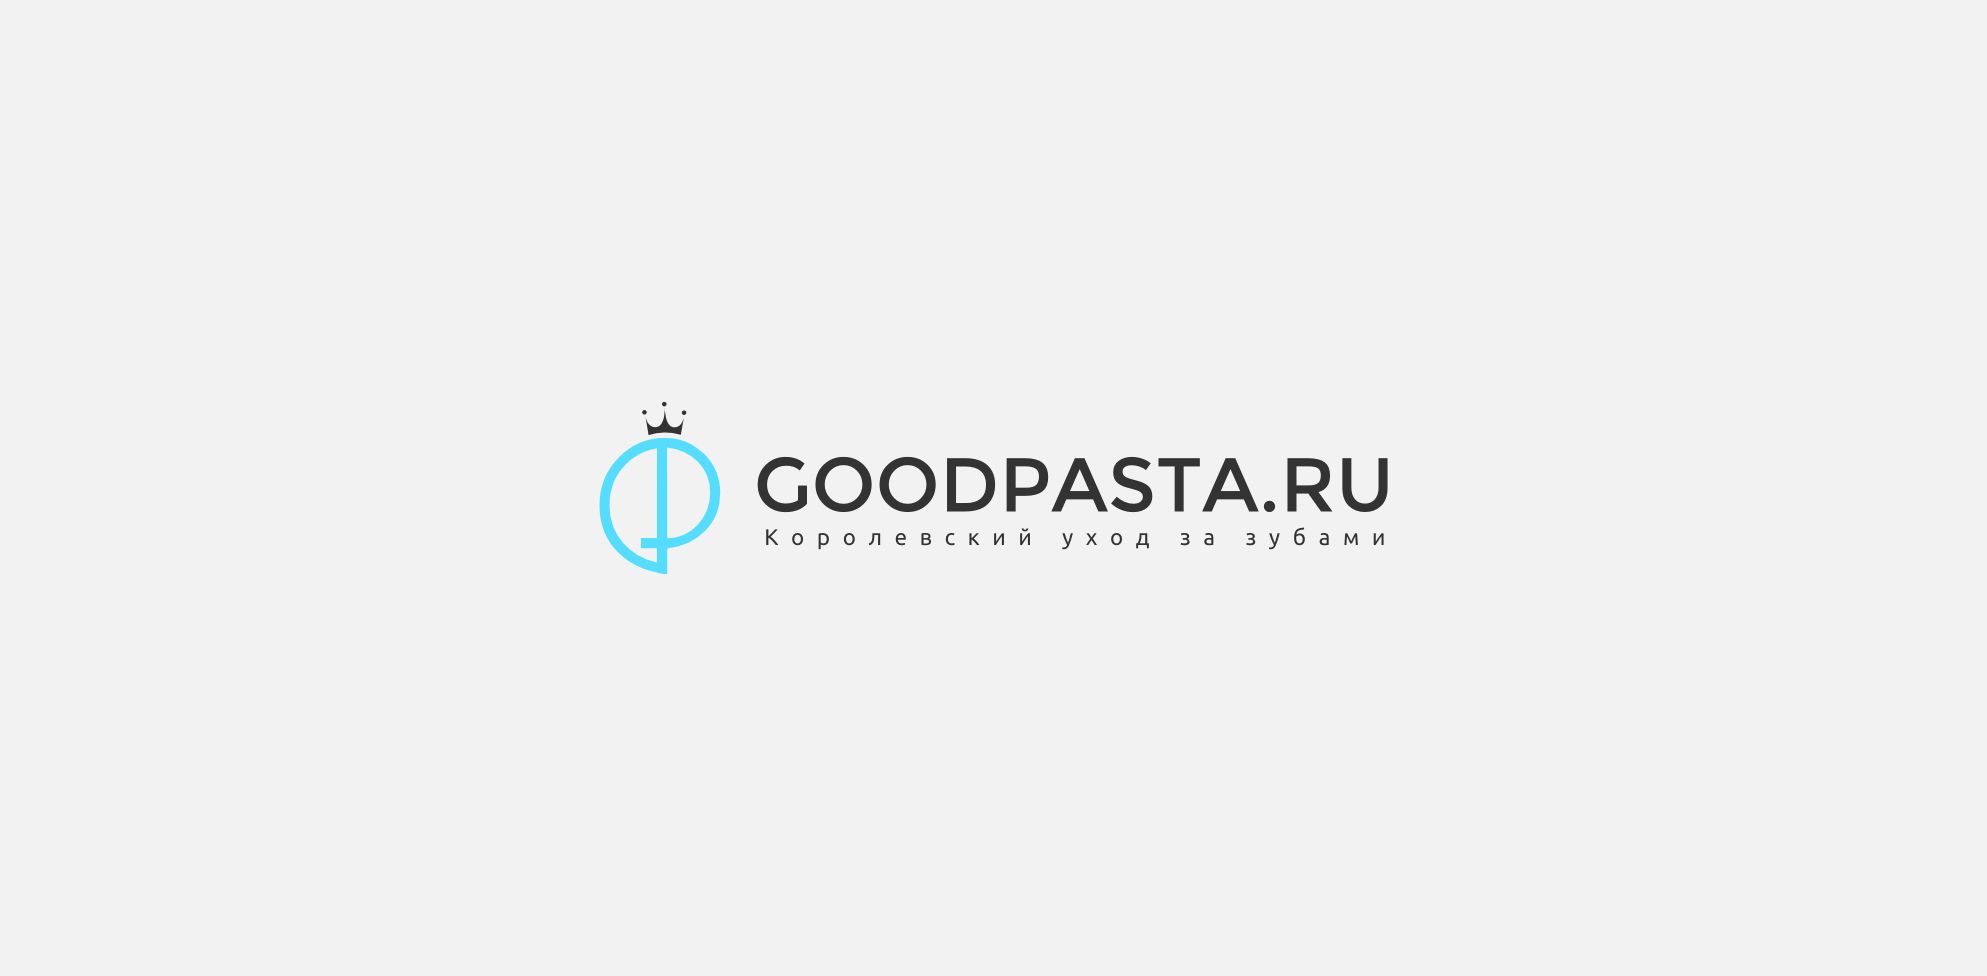 Логотип для интернет-магазина goodpasta.ru - дизайнер qwertymax2